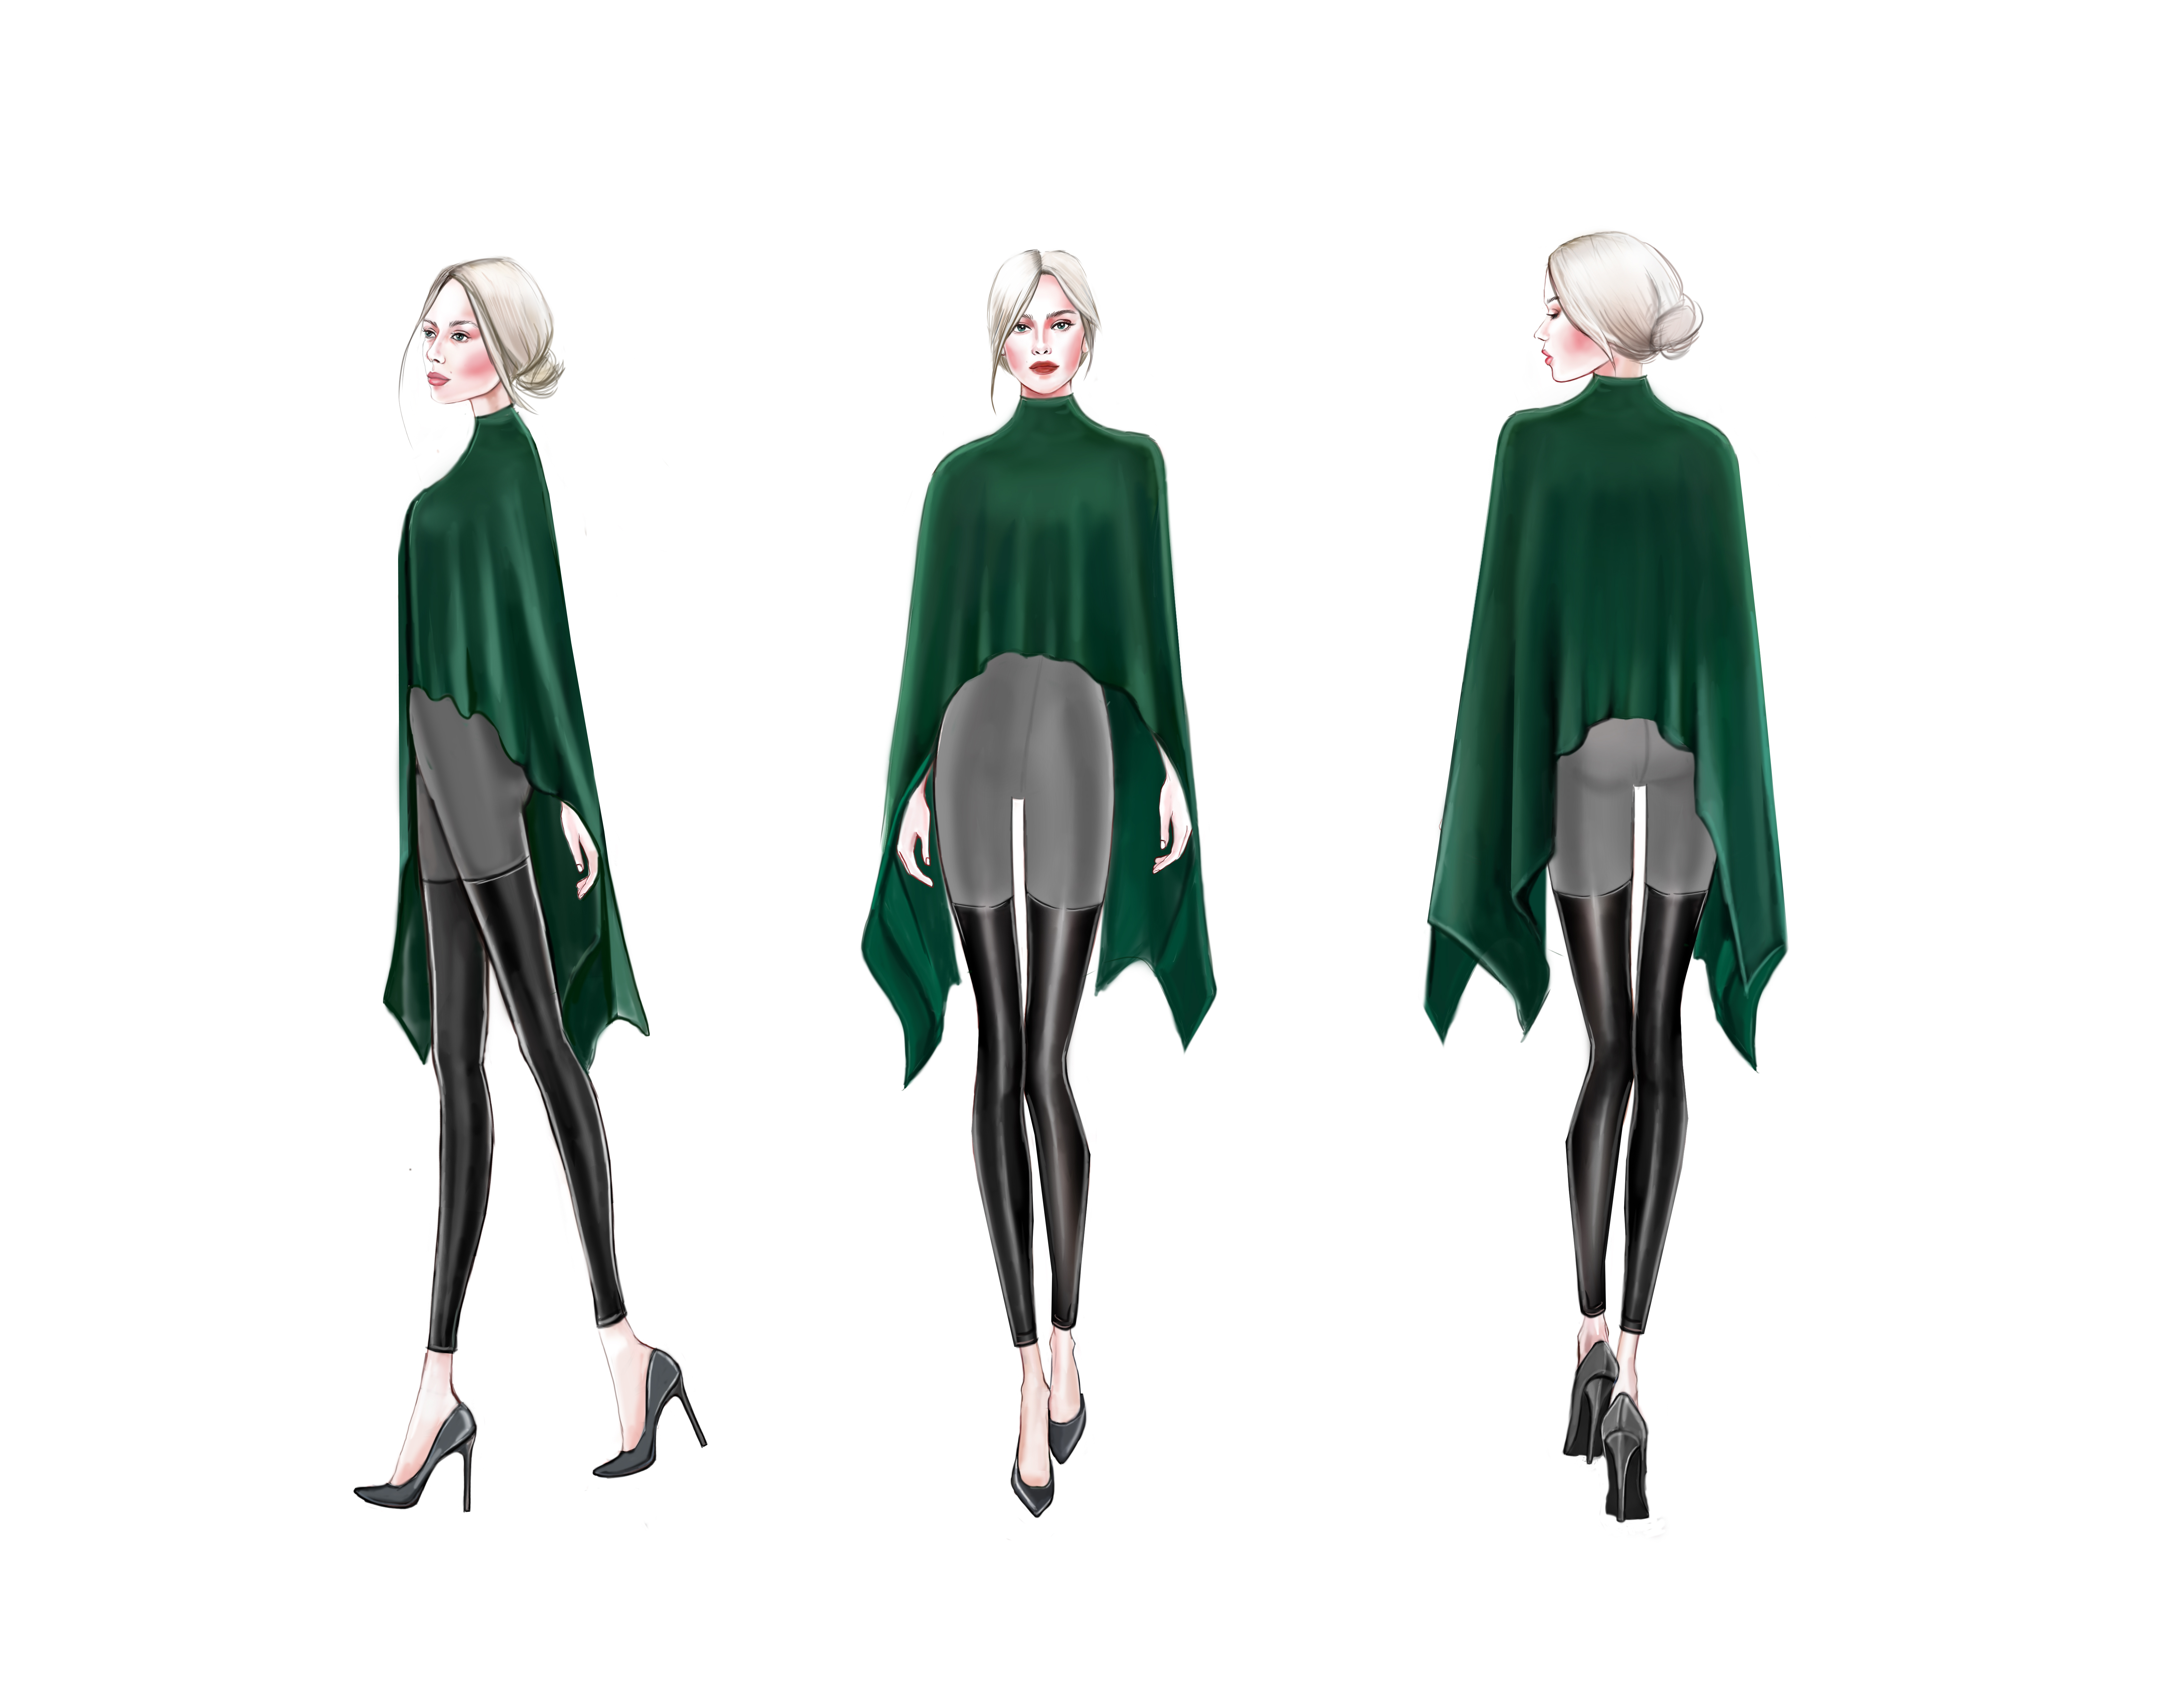 Fashion illustrations for clothing brands - AhVero